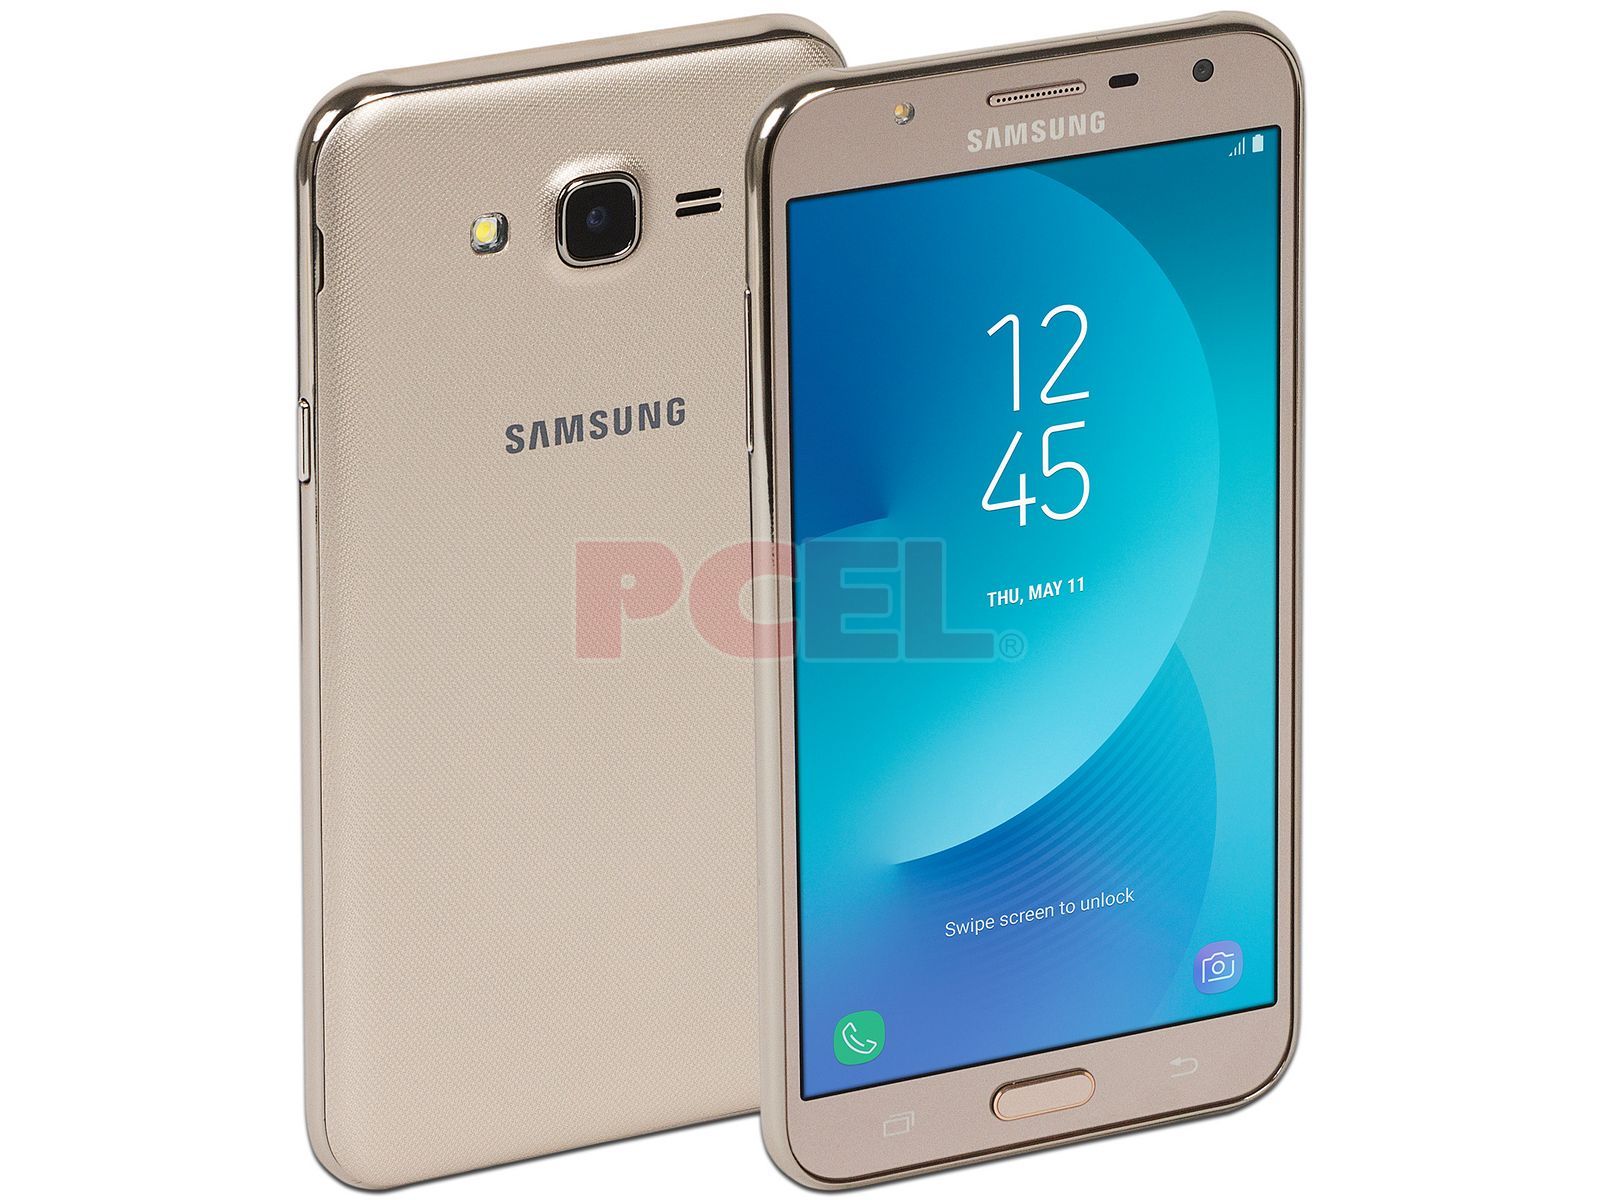 Smartphone Samsung Galaxy J7 Neo: Procesador Octa Core ( GHz), Memoria  RAM de 2GB, Almacenamiento de 16GB (expandible con microSD), Pantalla de  